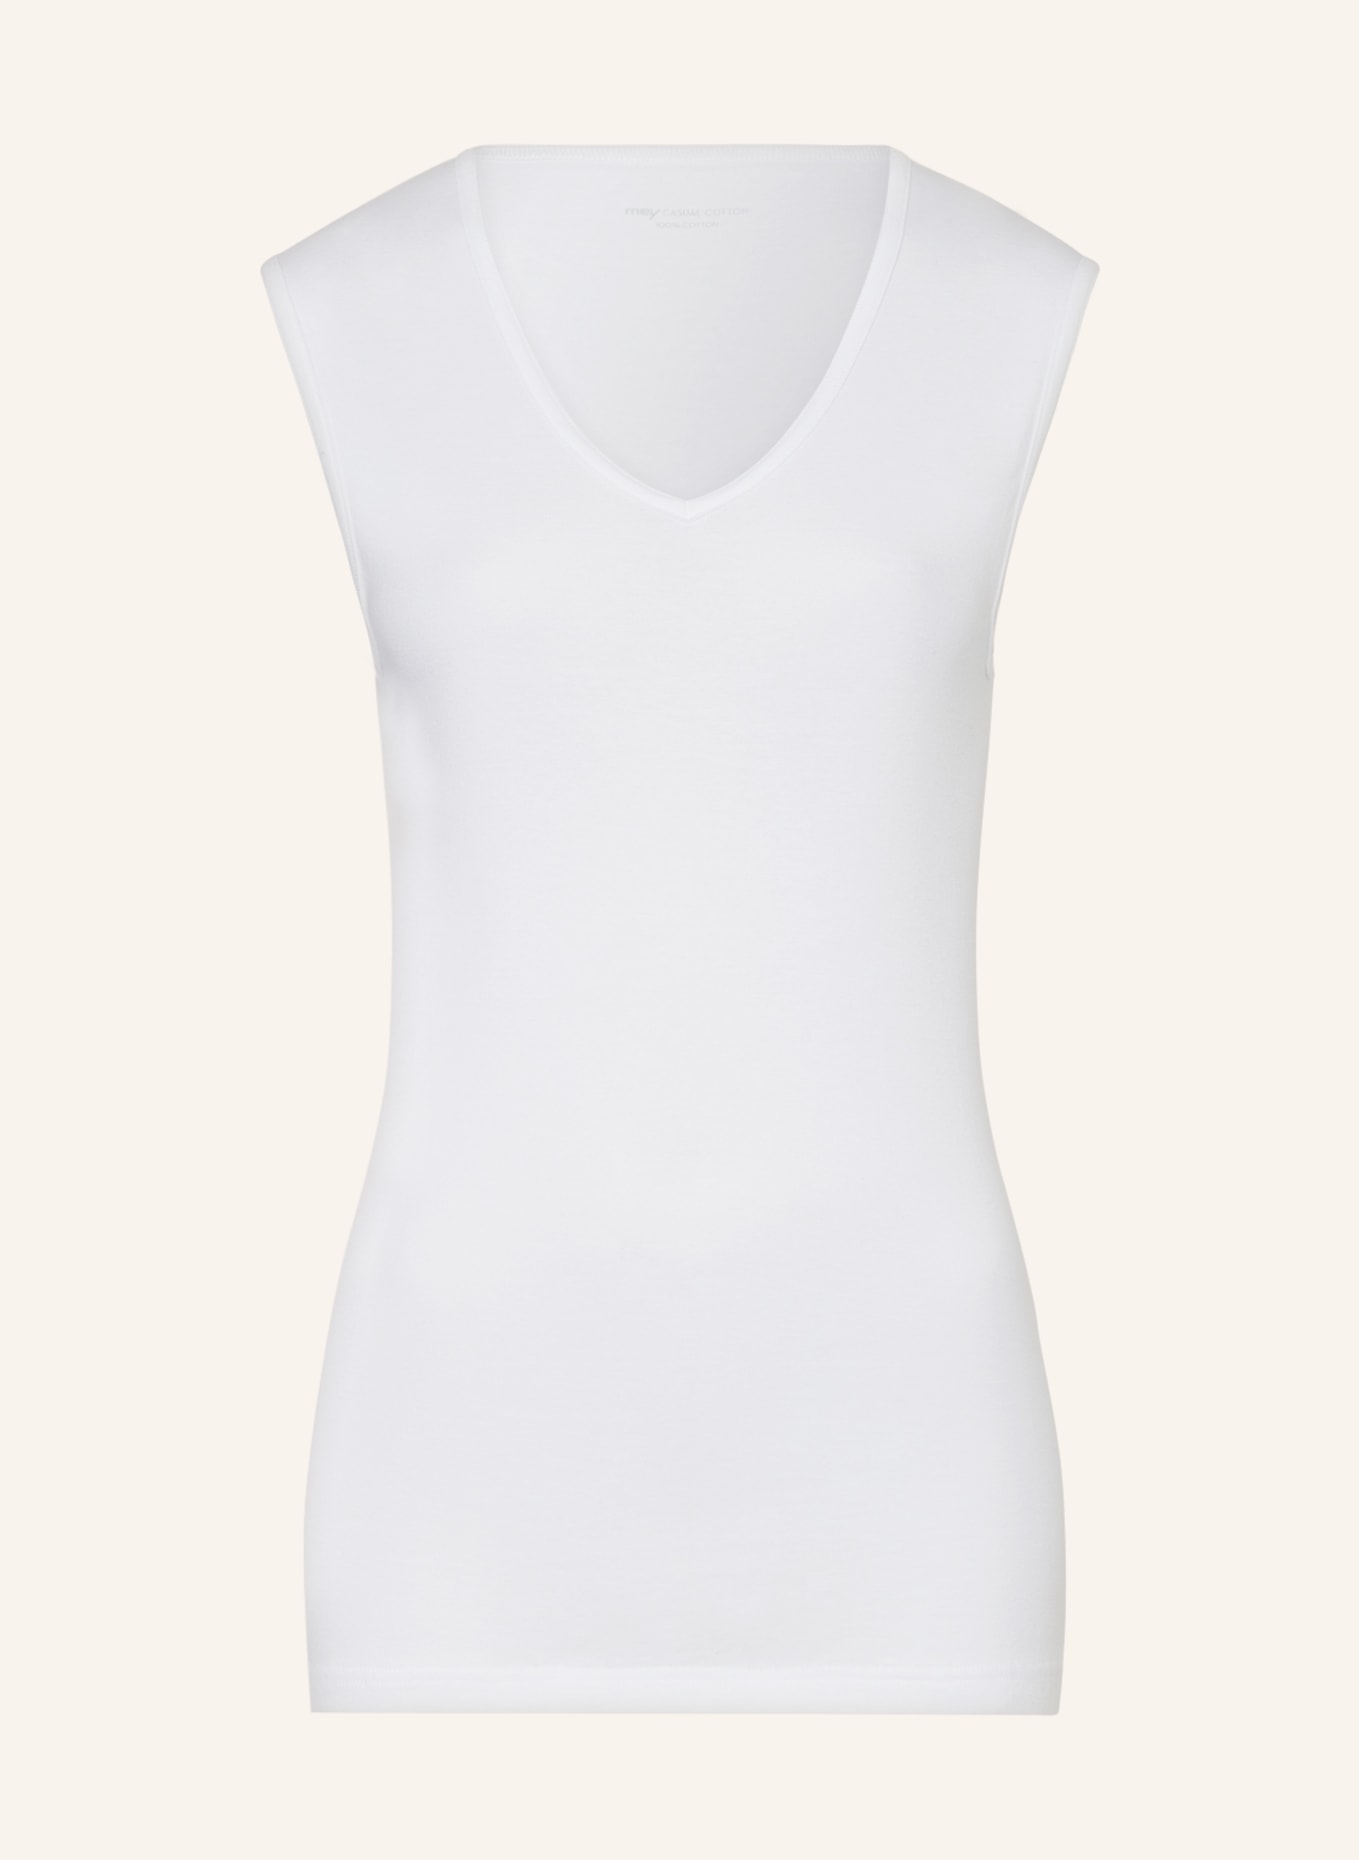 mey V-neck shirt series DRY COTTON, Color: WHITE (Image 1)